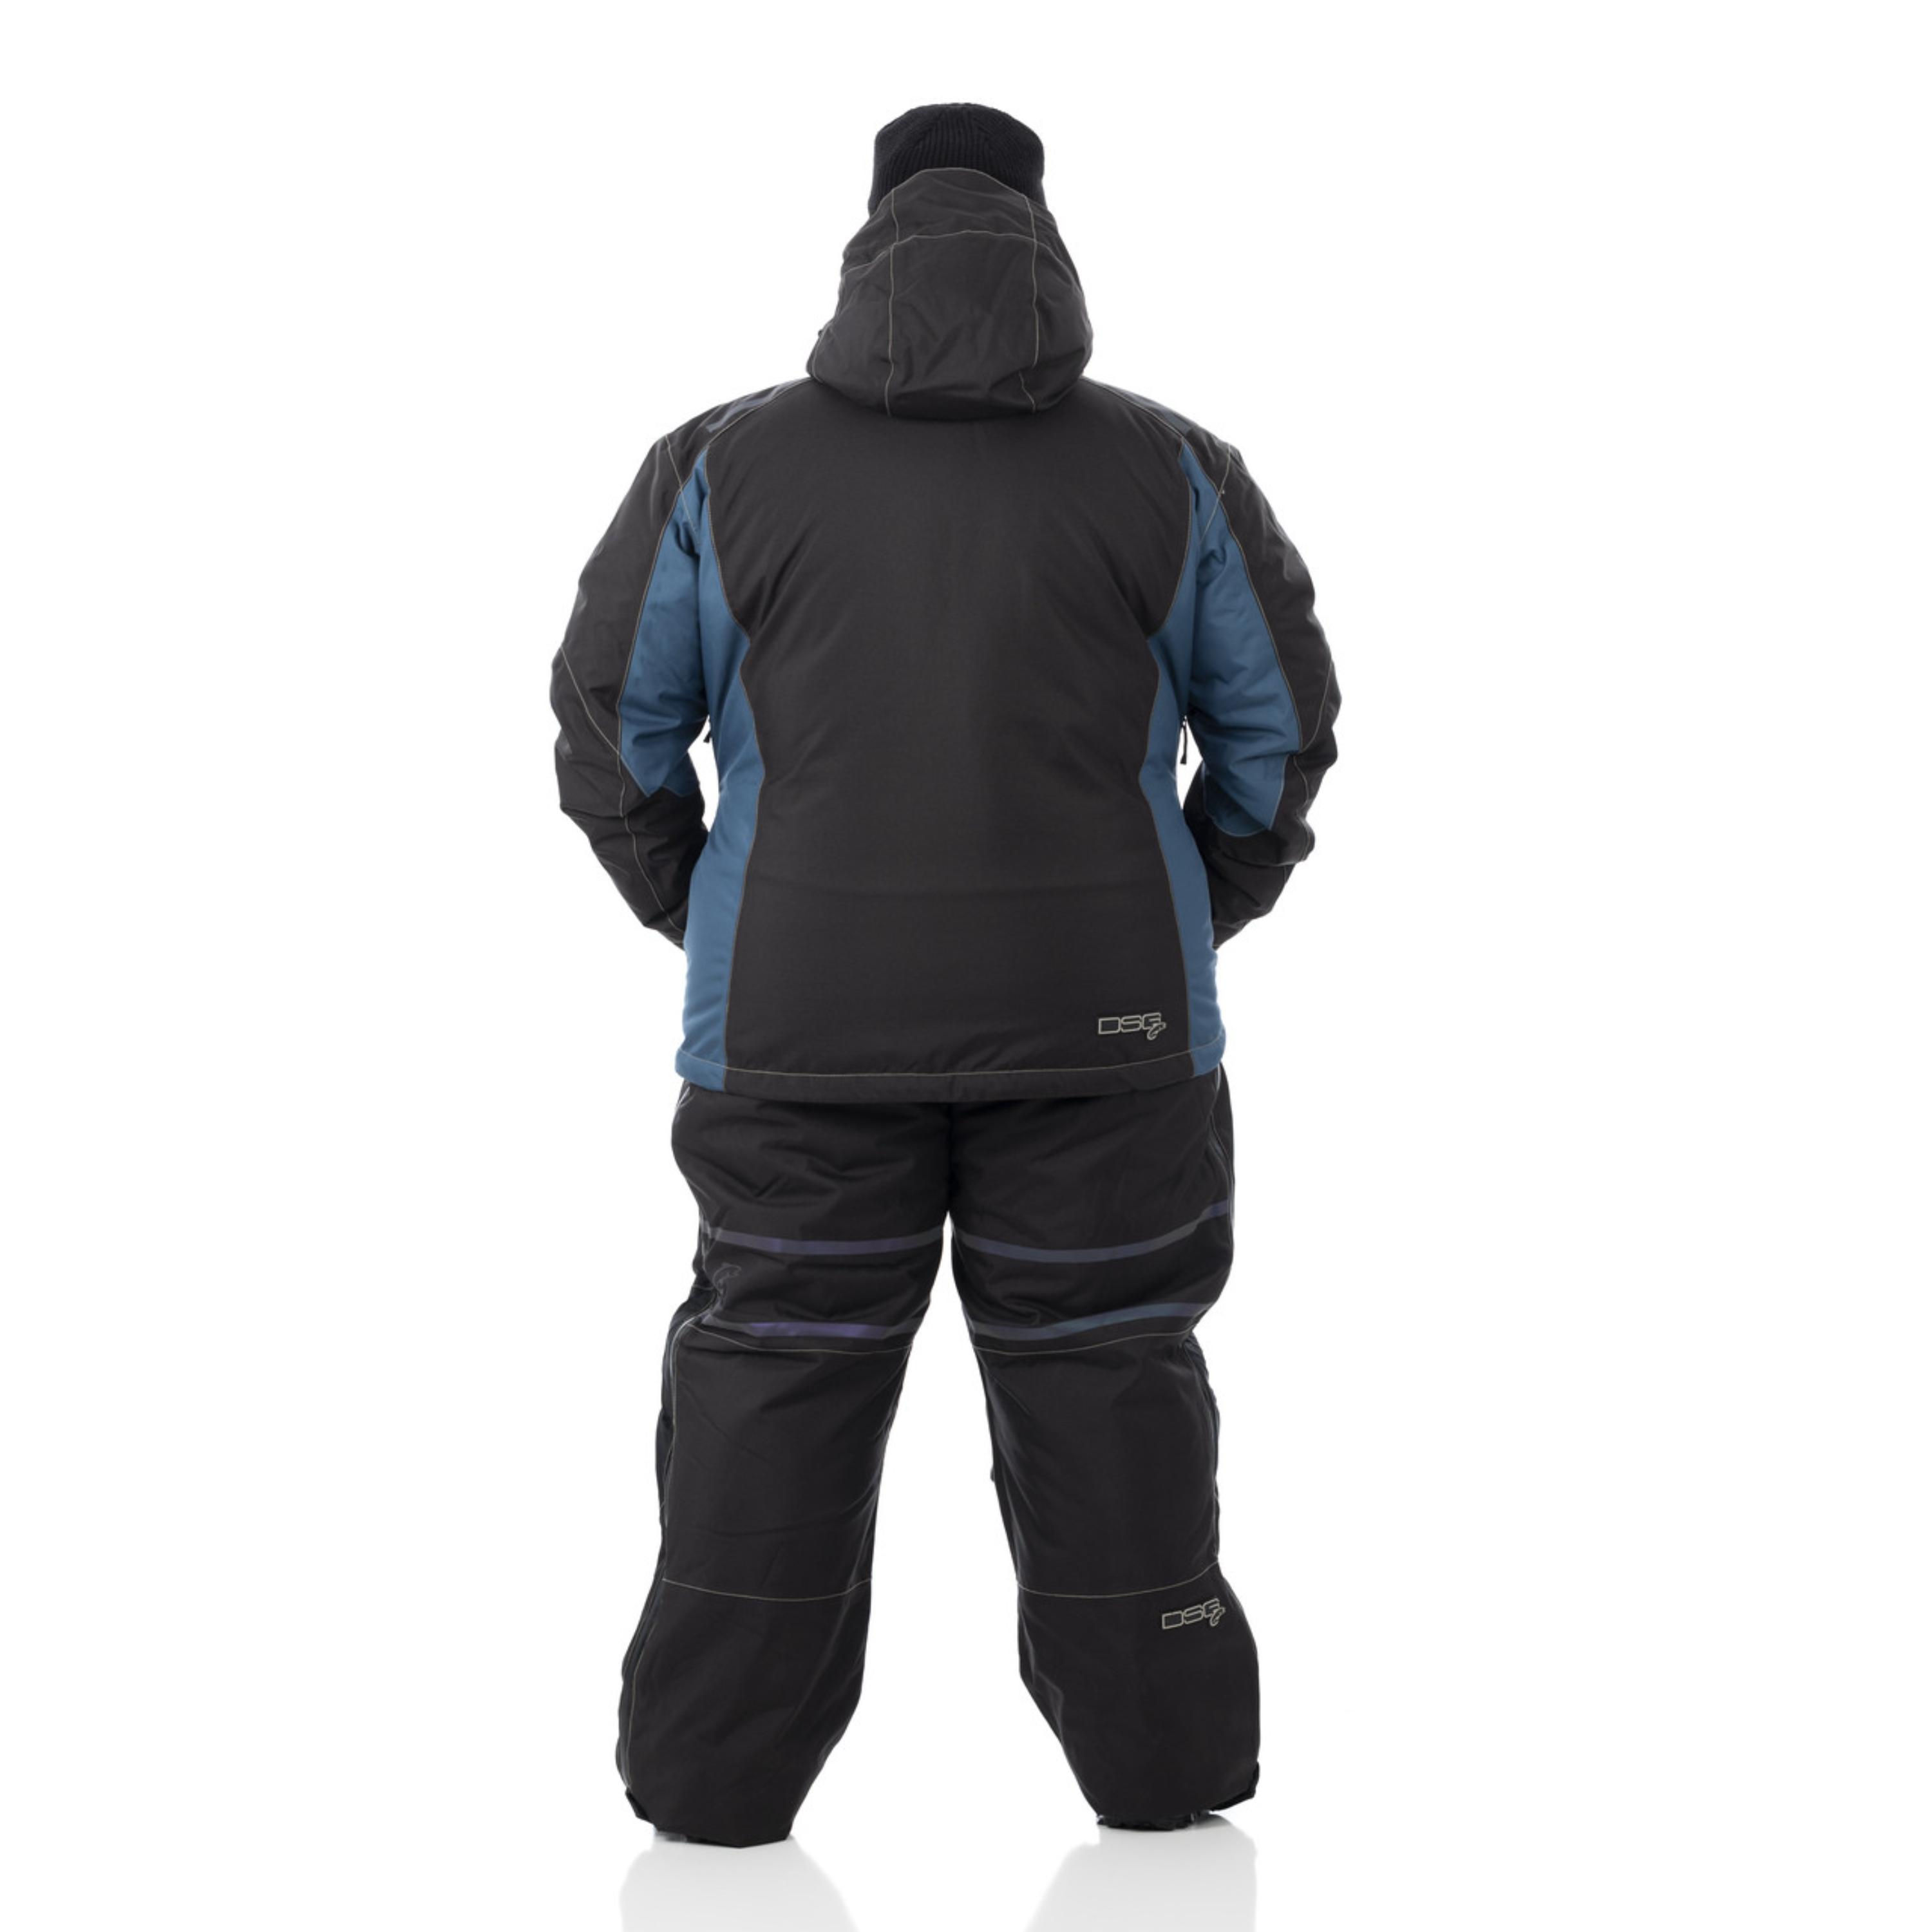 DSG Outerwear Avid 2.0 Ice Dropseat Bib, Medium, Black